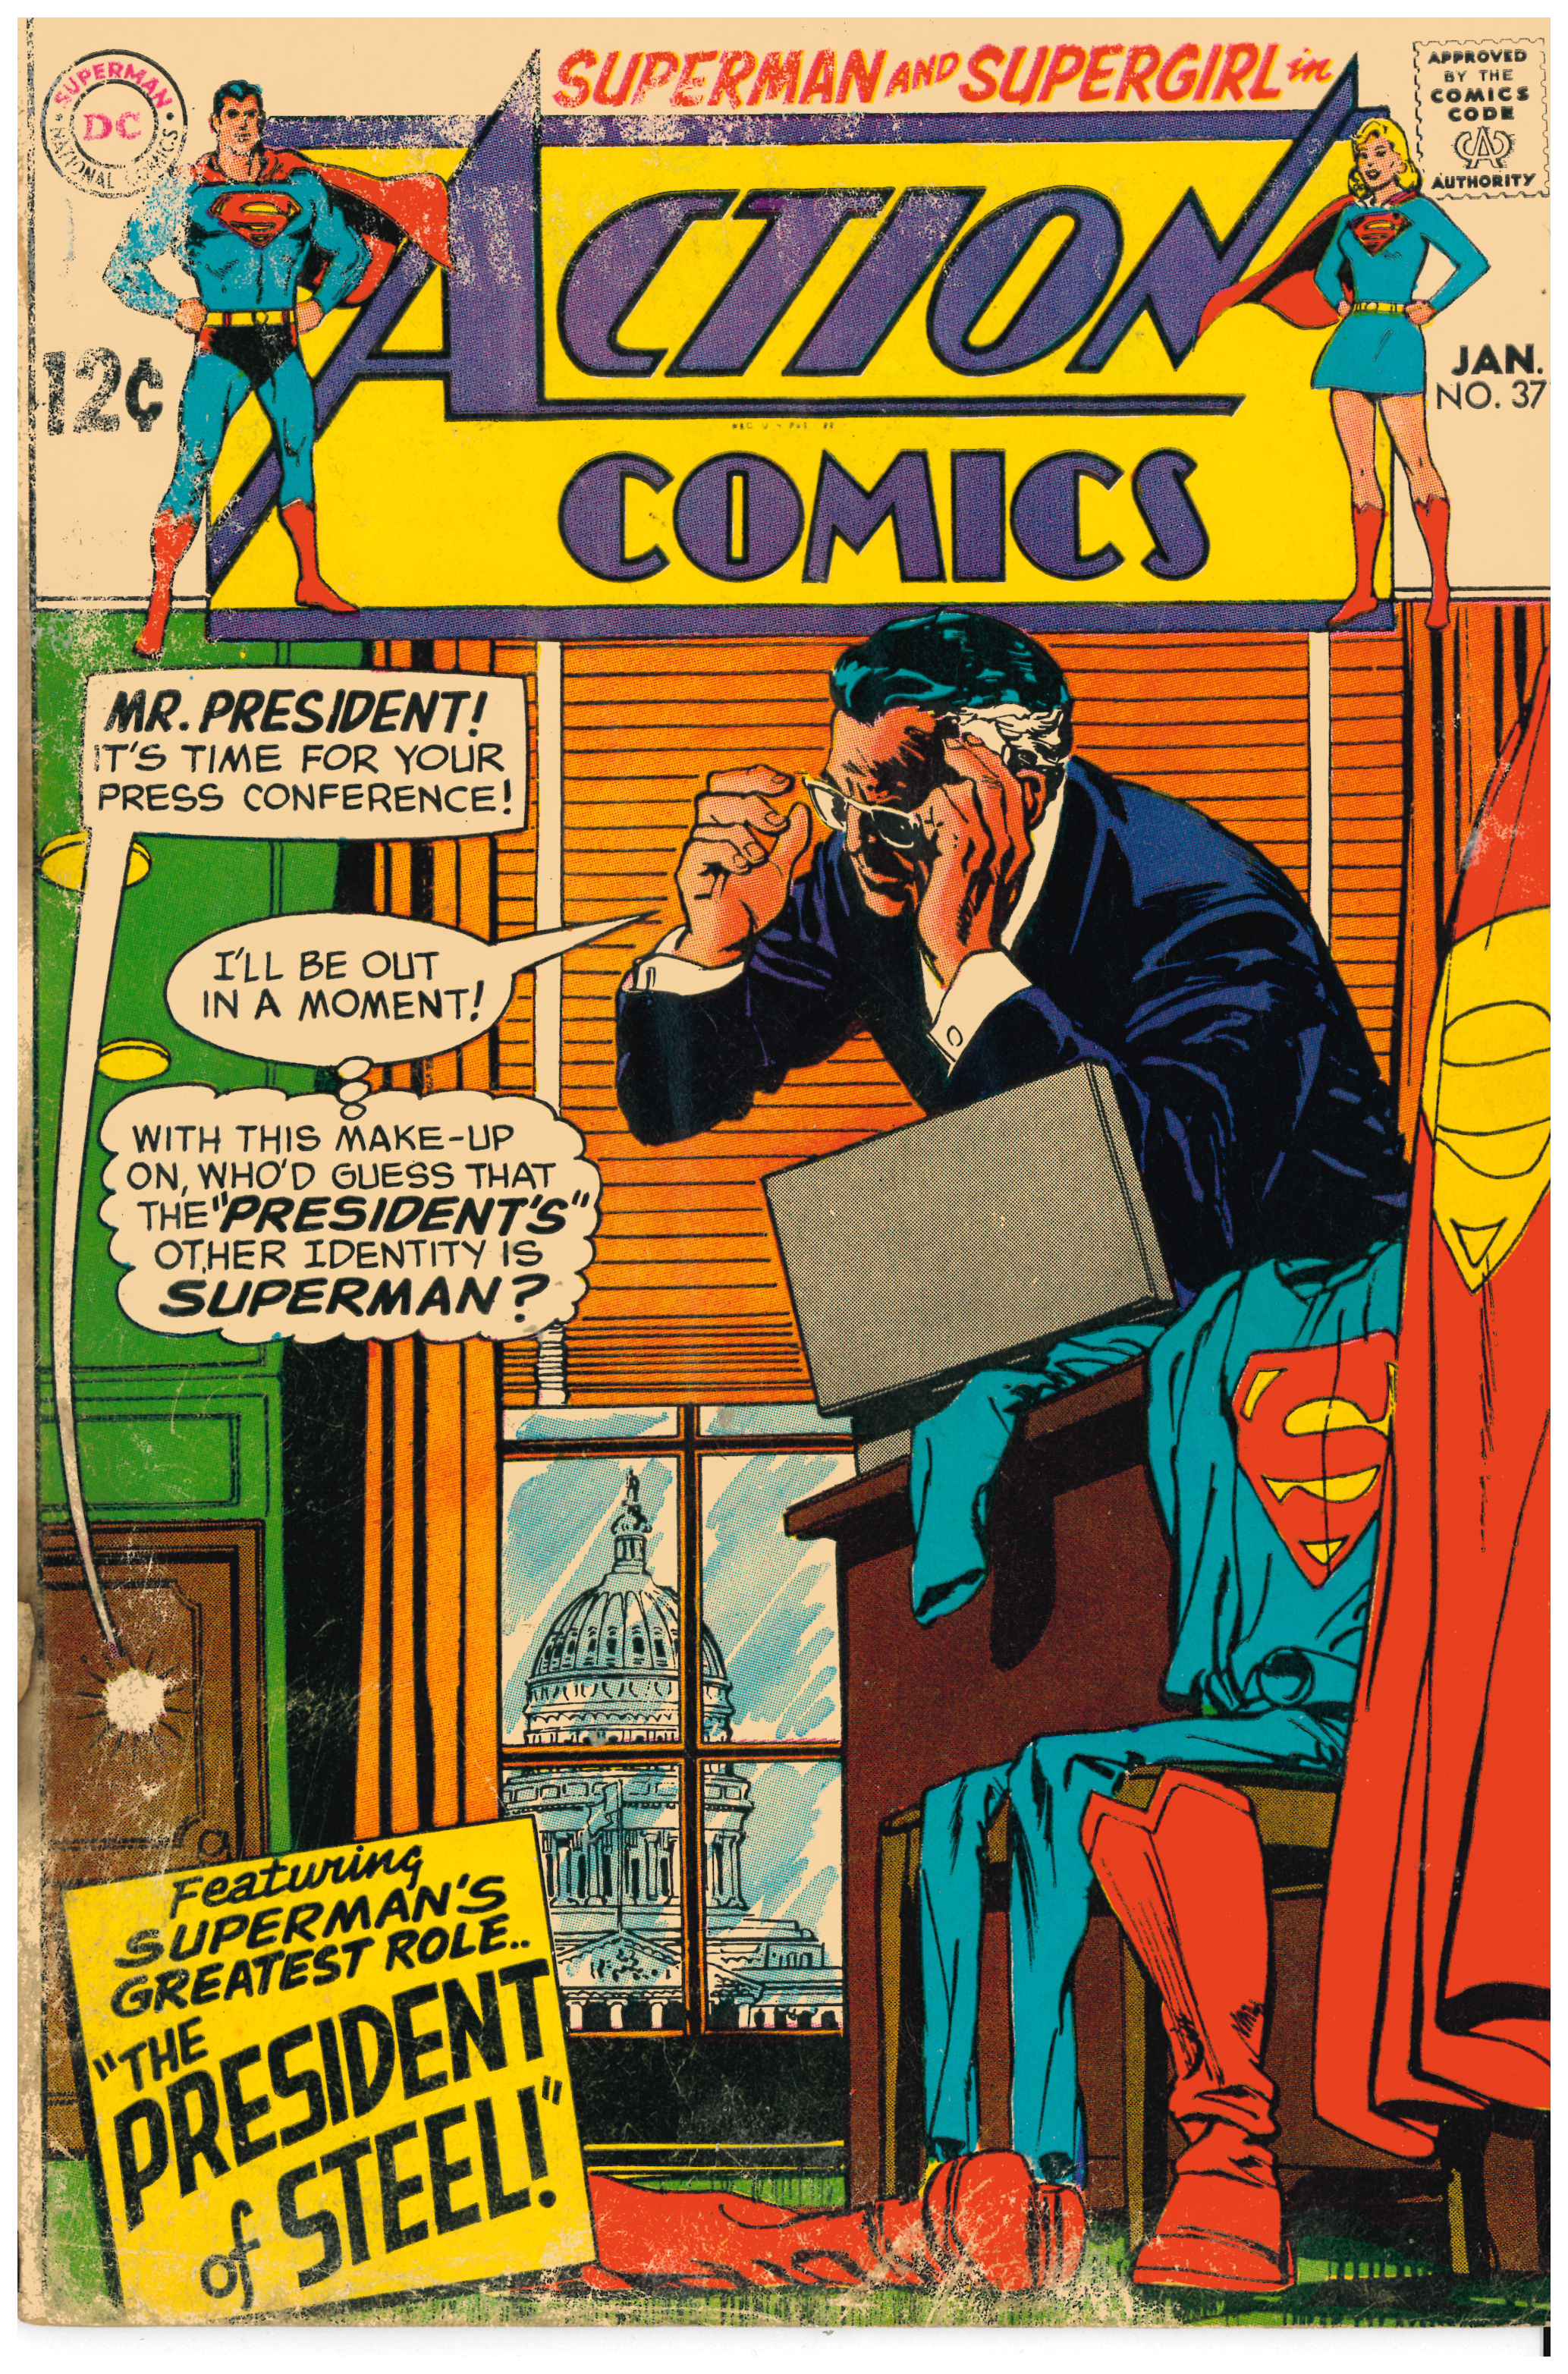 Action Comics #371